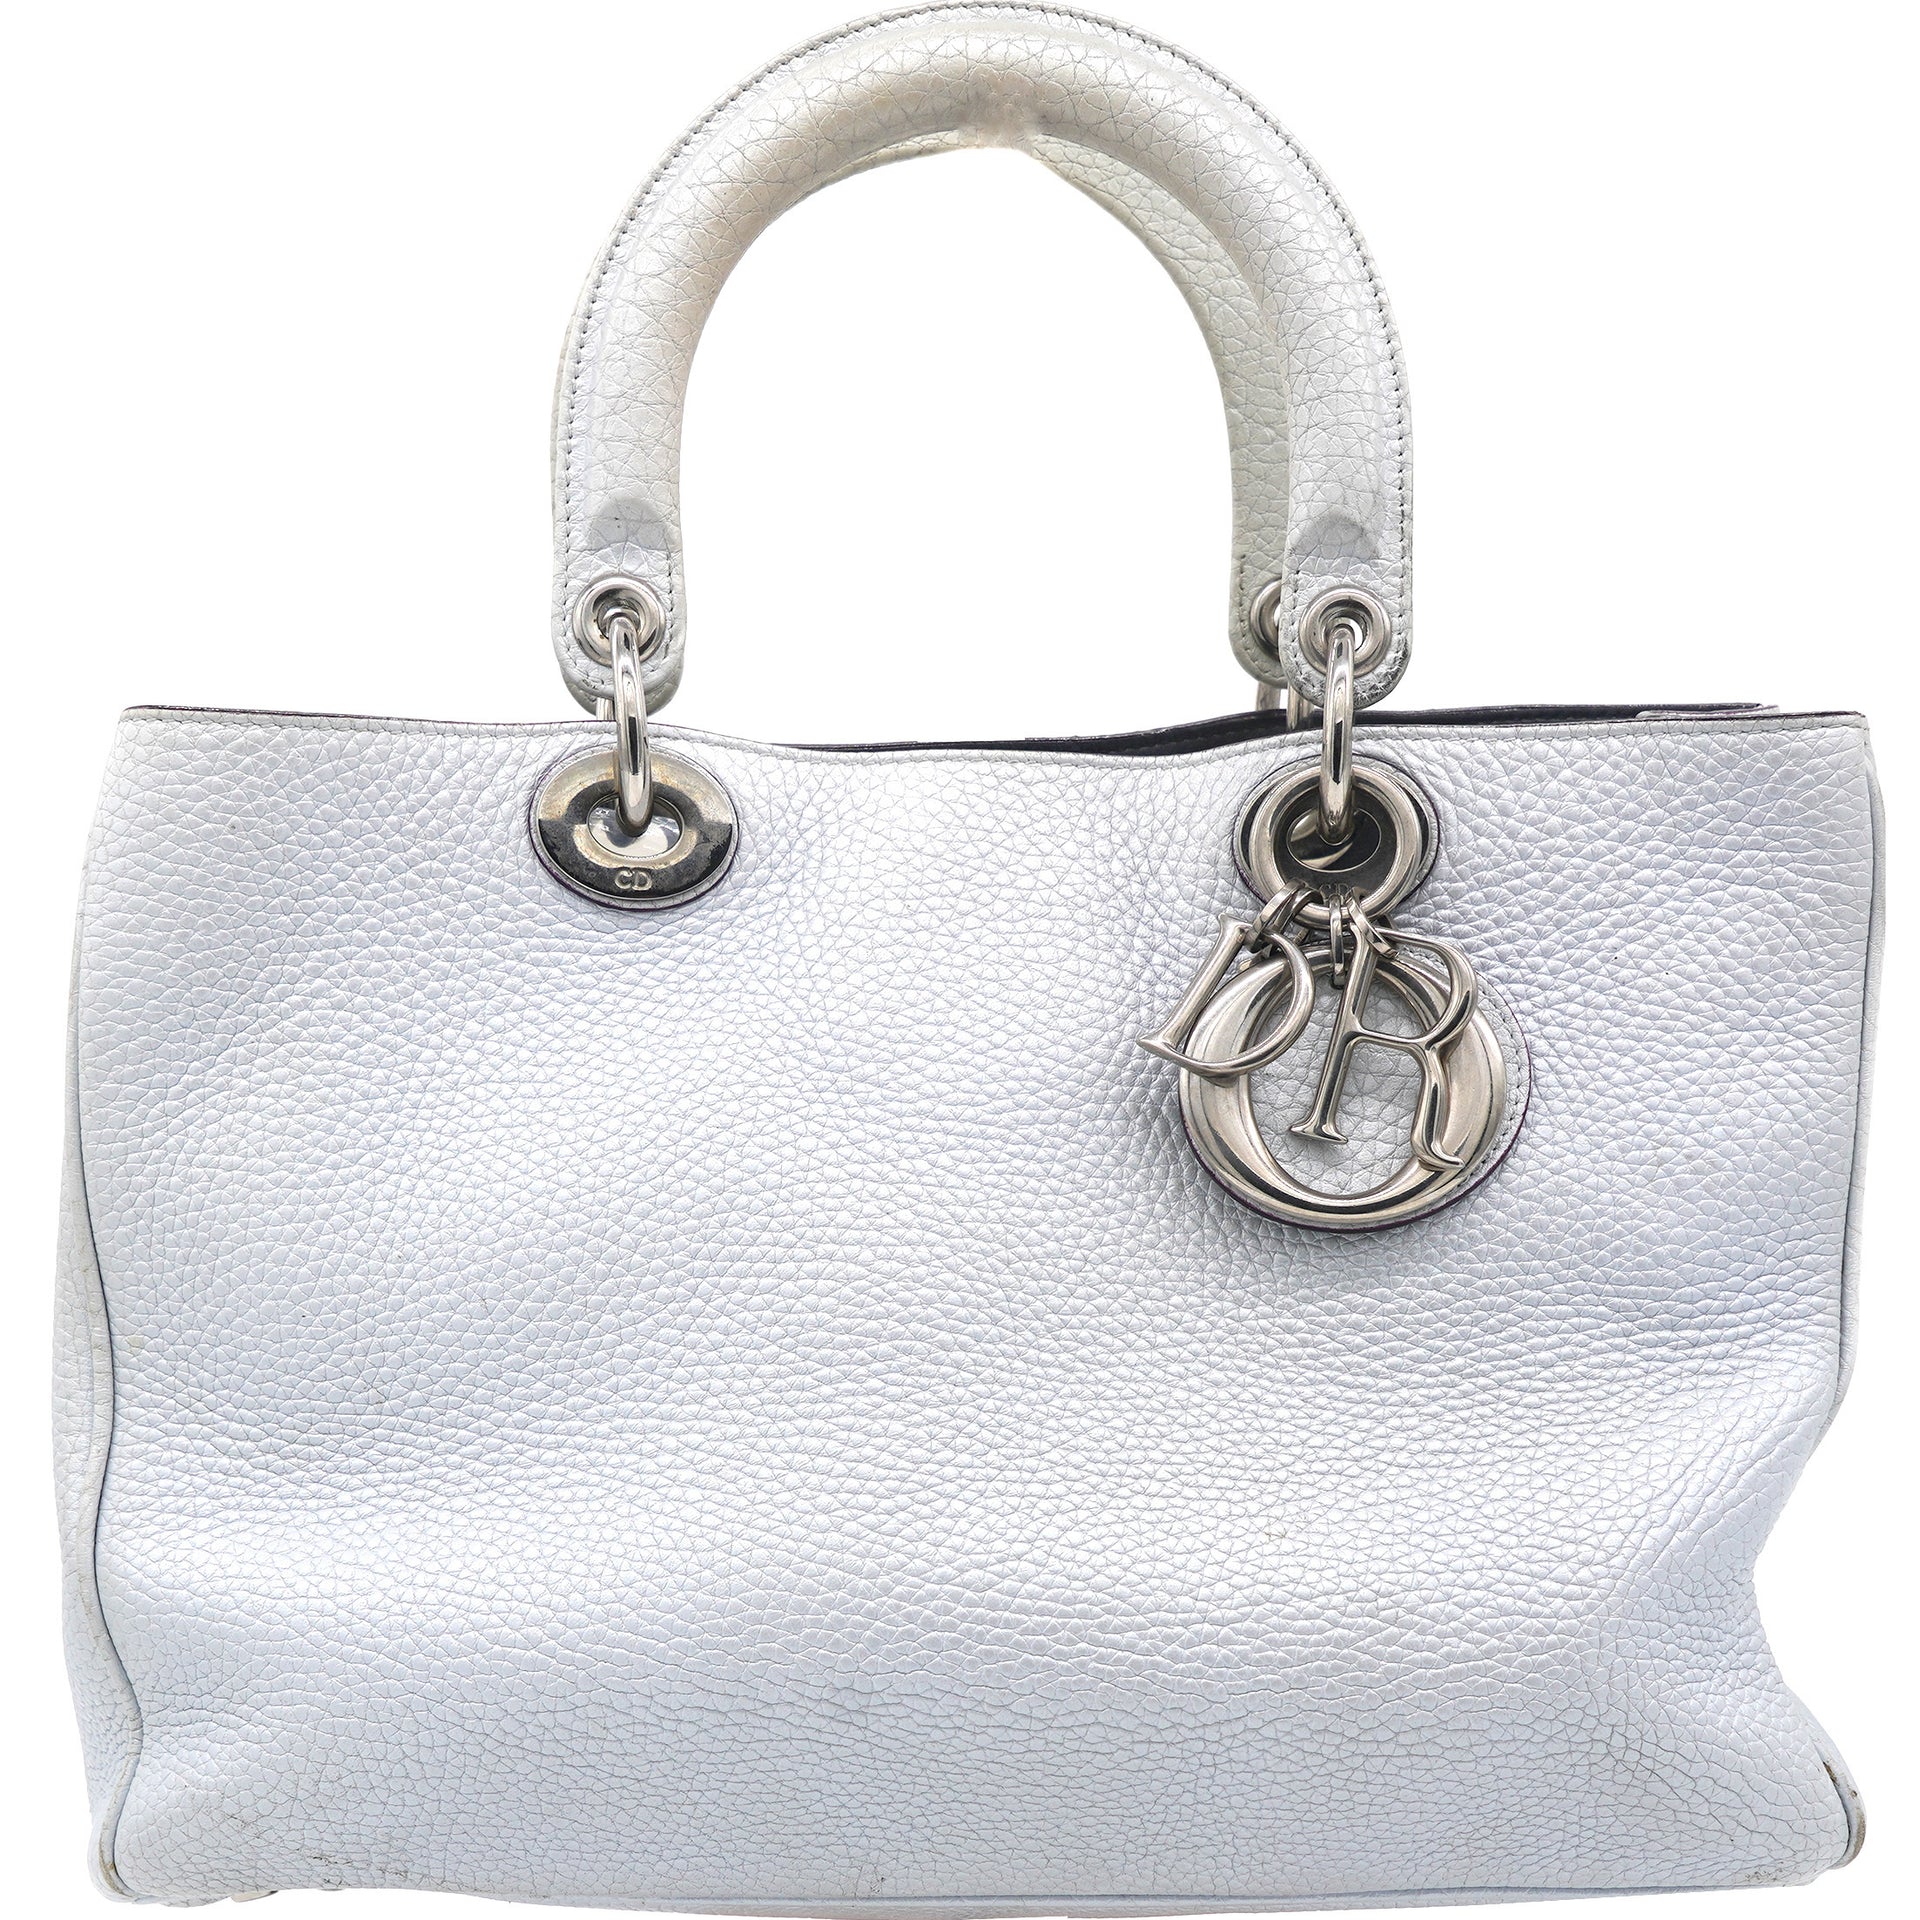 The Lady Dior Handbag Gets a Striking New Look  SURFACE